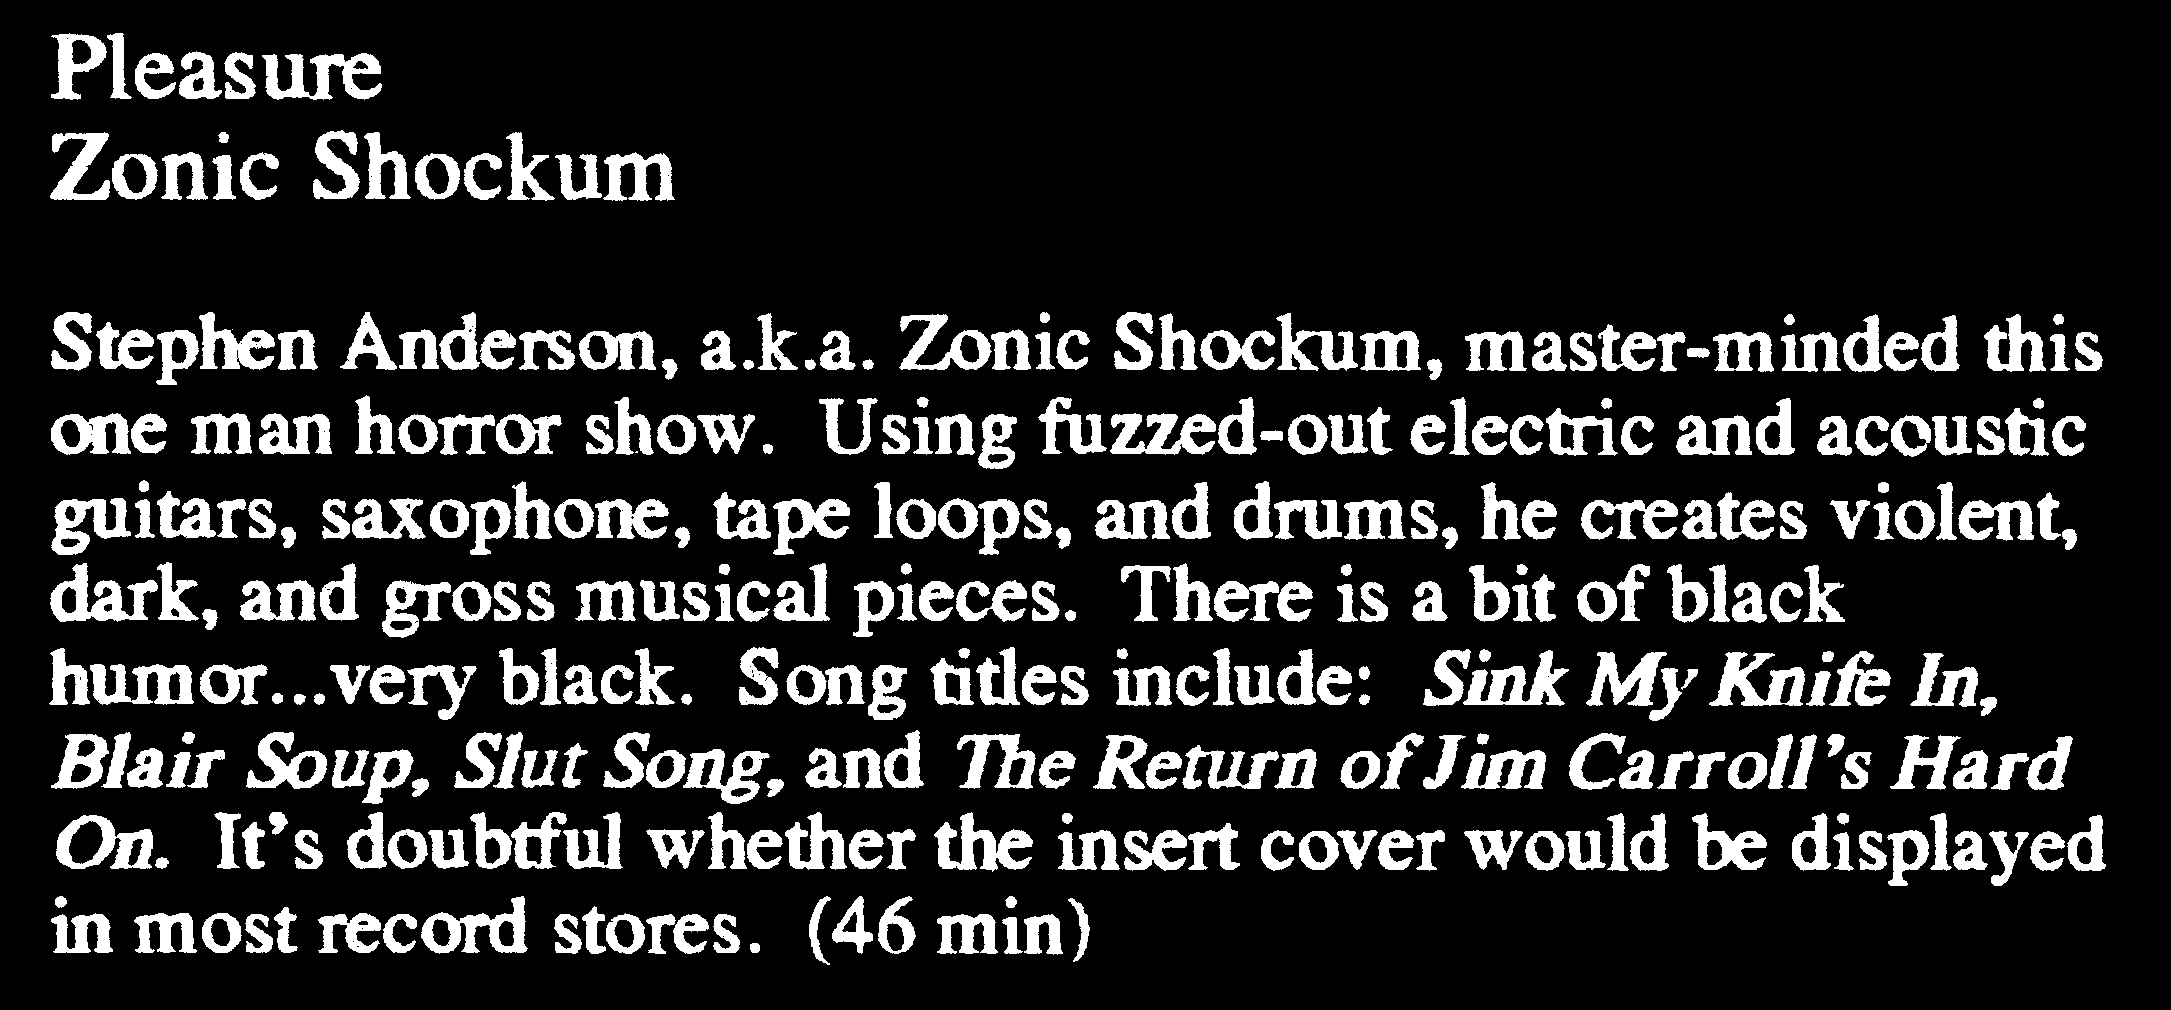 ZONIC SHOCKUM - "Pleasure" review in Missing Link Cassette Catalogue